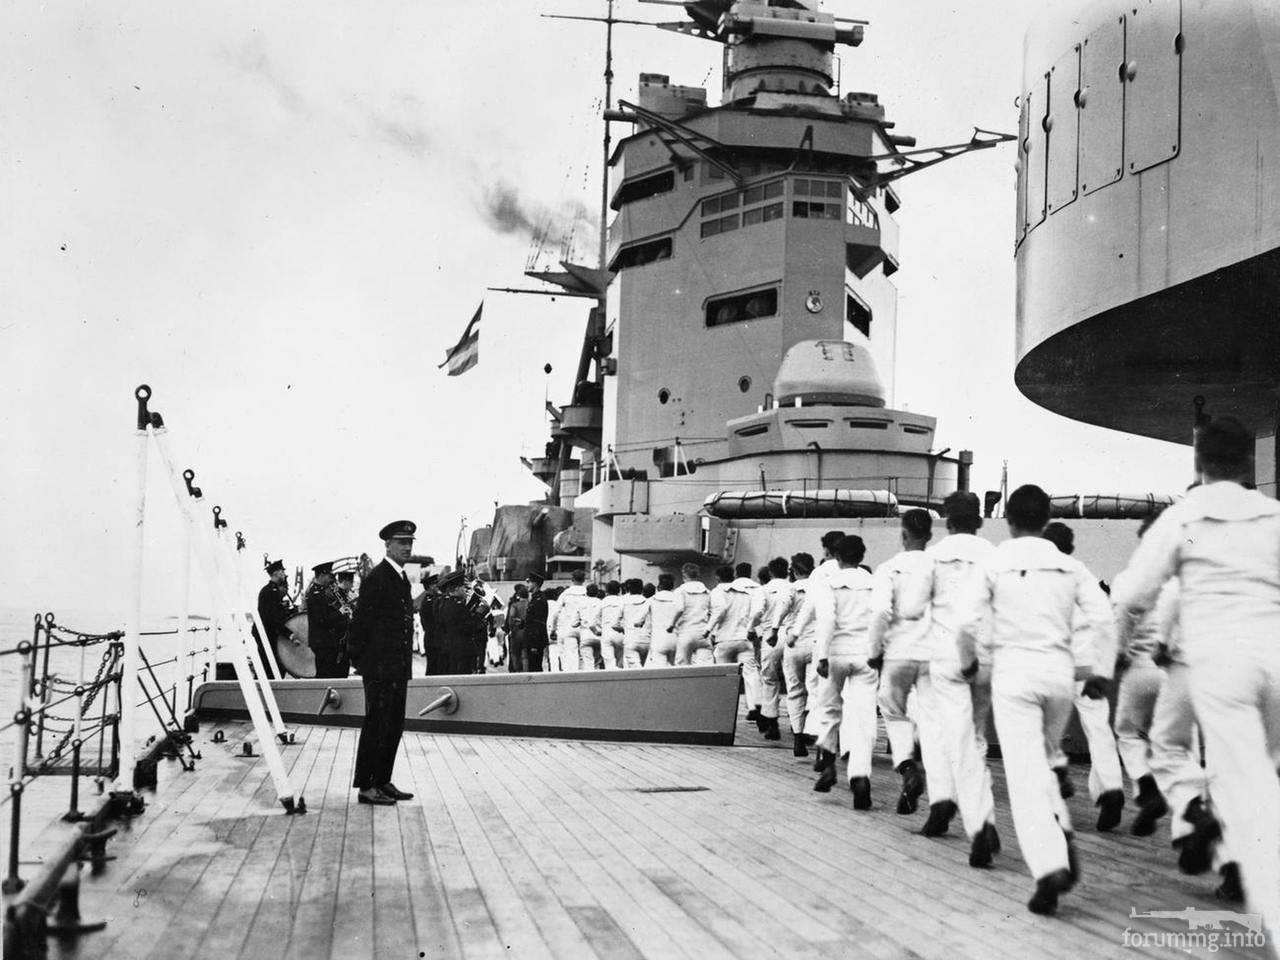 138060 - Пробежка экипажа по палубе линкора HMS Rodney